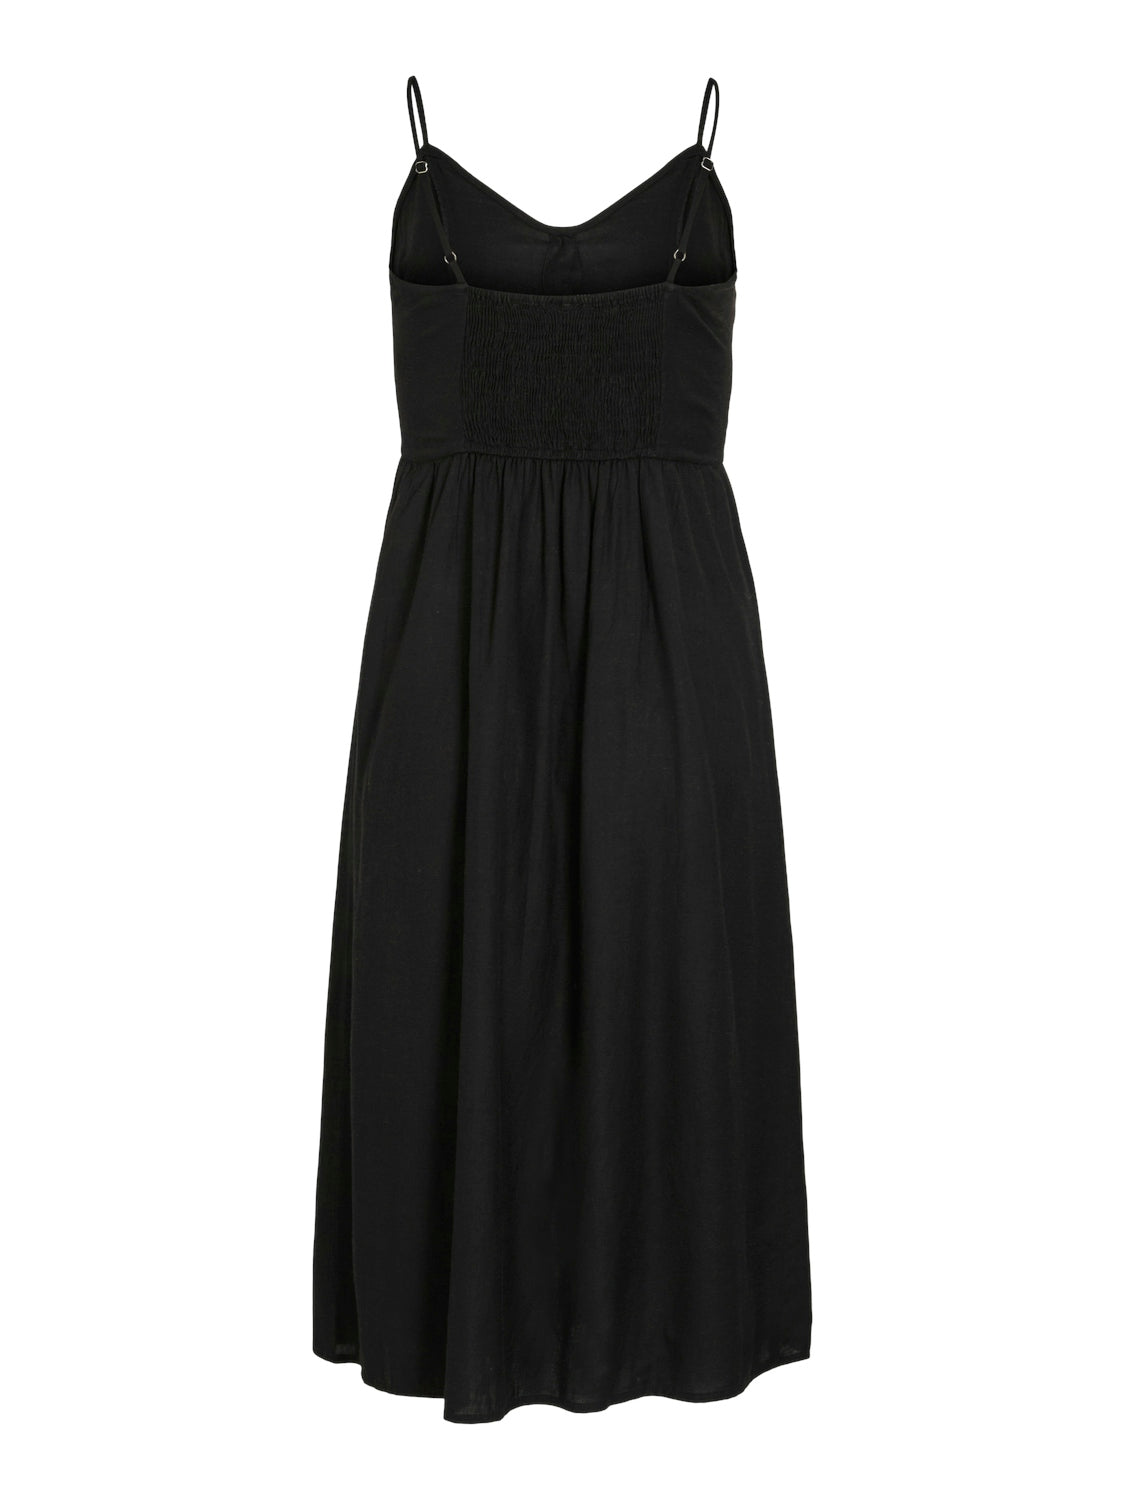 Pricil Dress Black